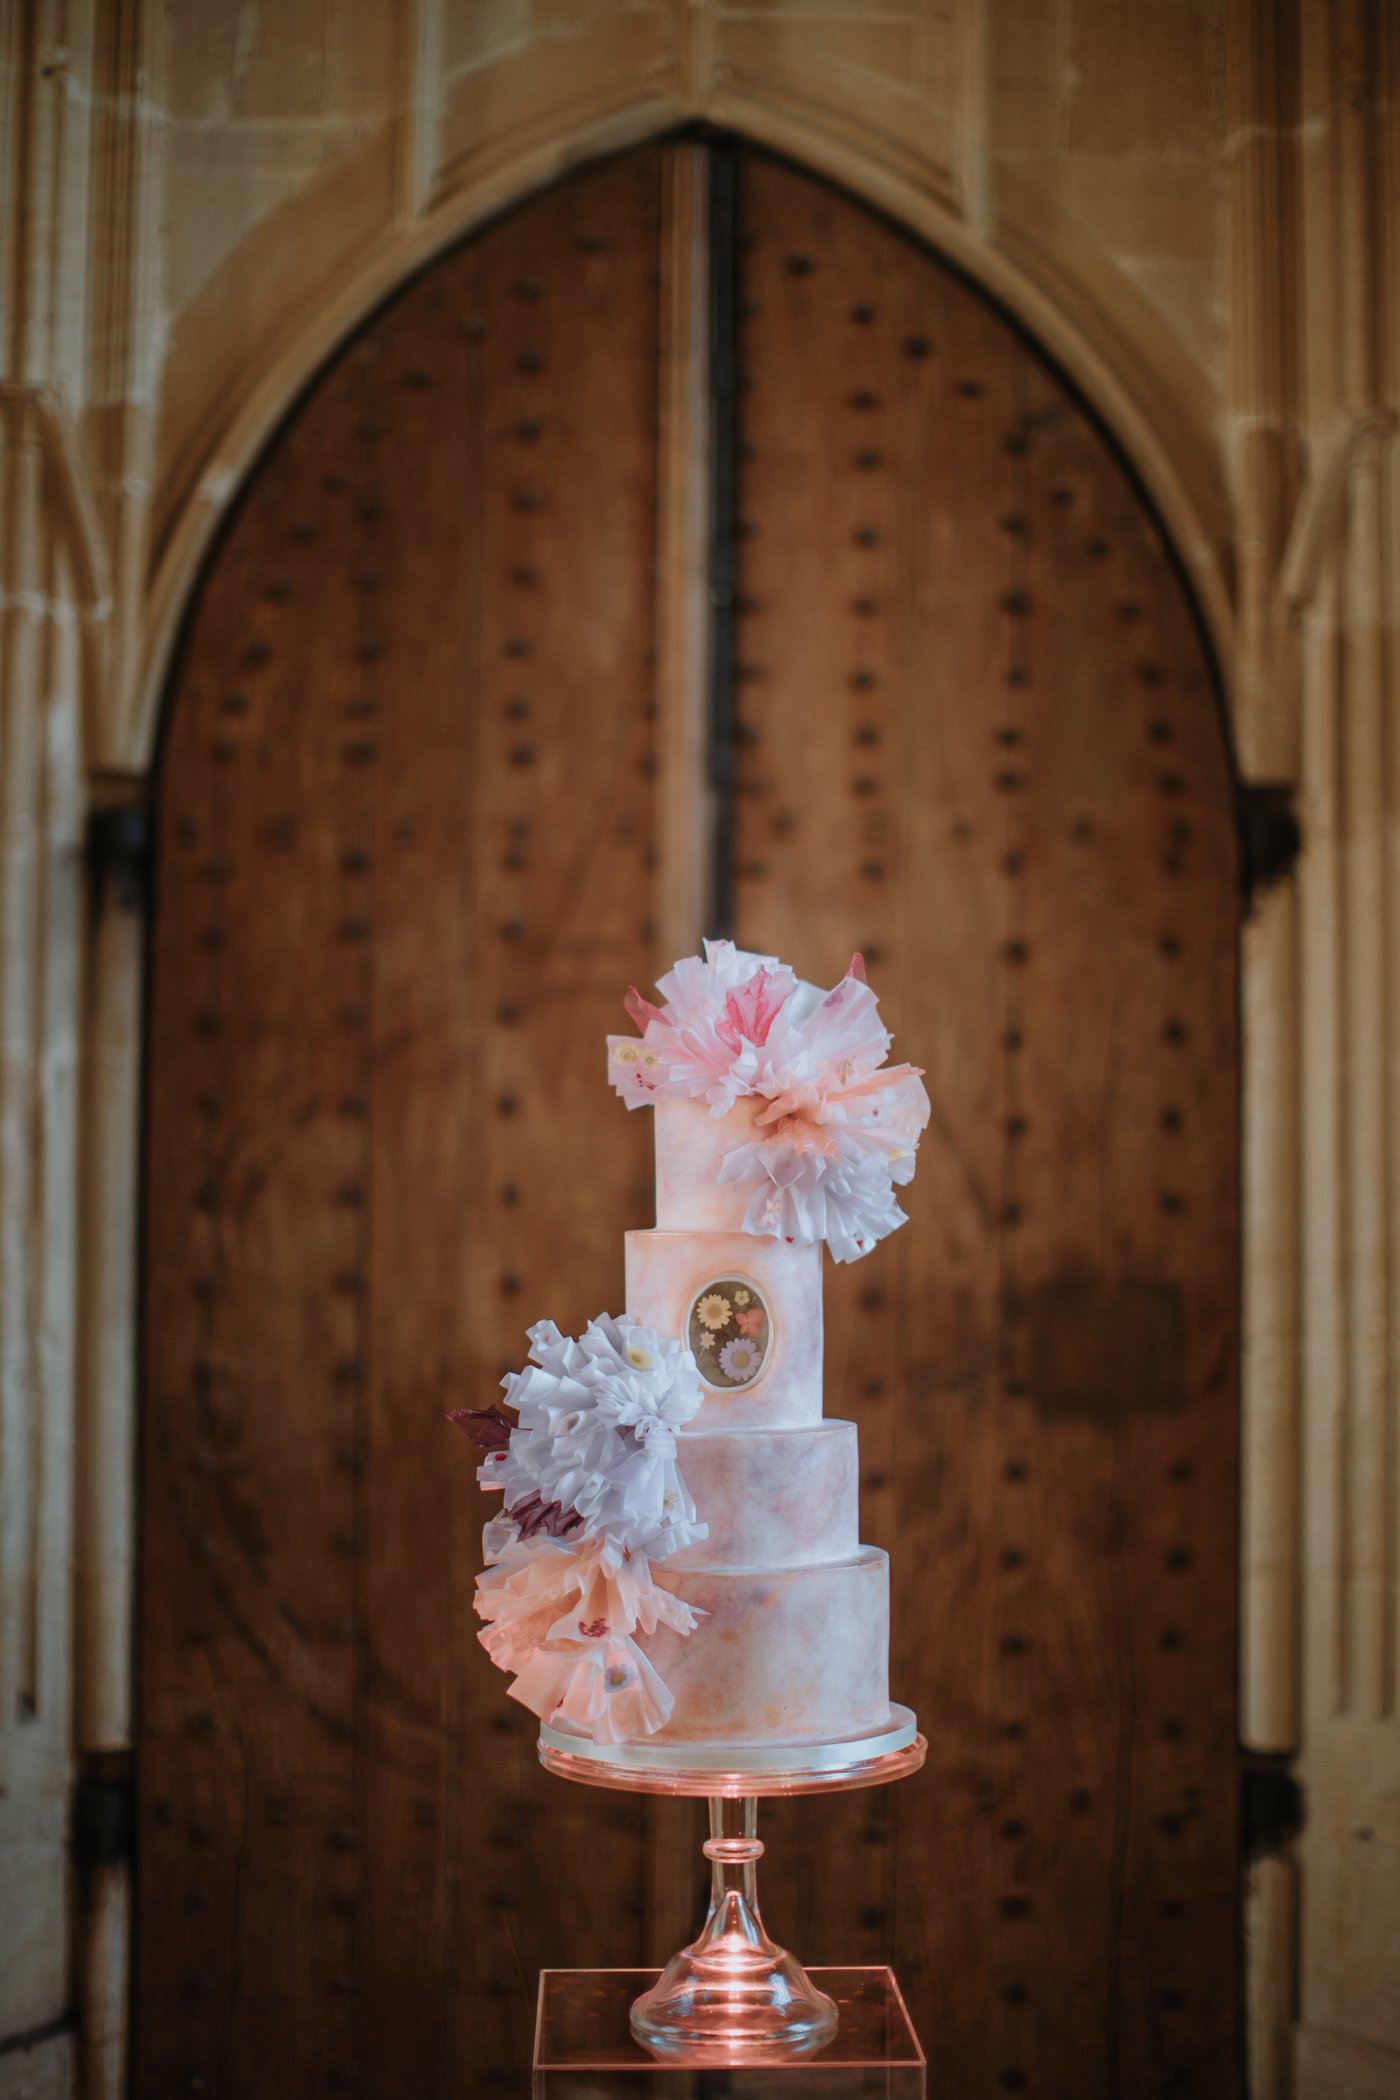 Stunning pastel ruffled wedding cake